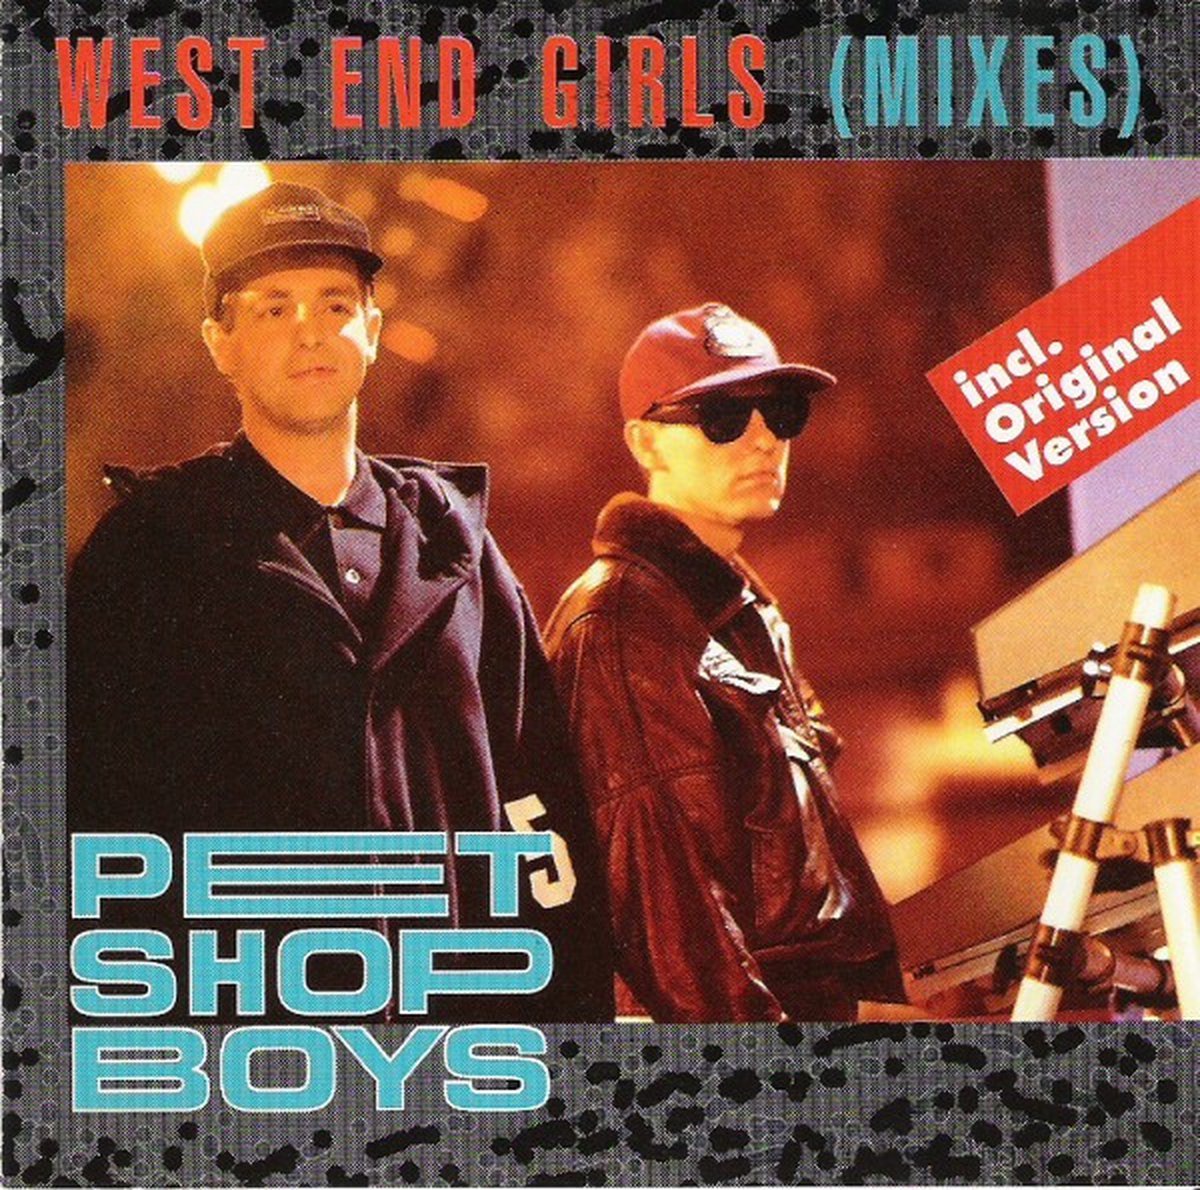 West End Girls -Mixes- - Pet Shop Boys